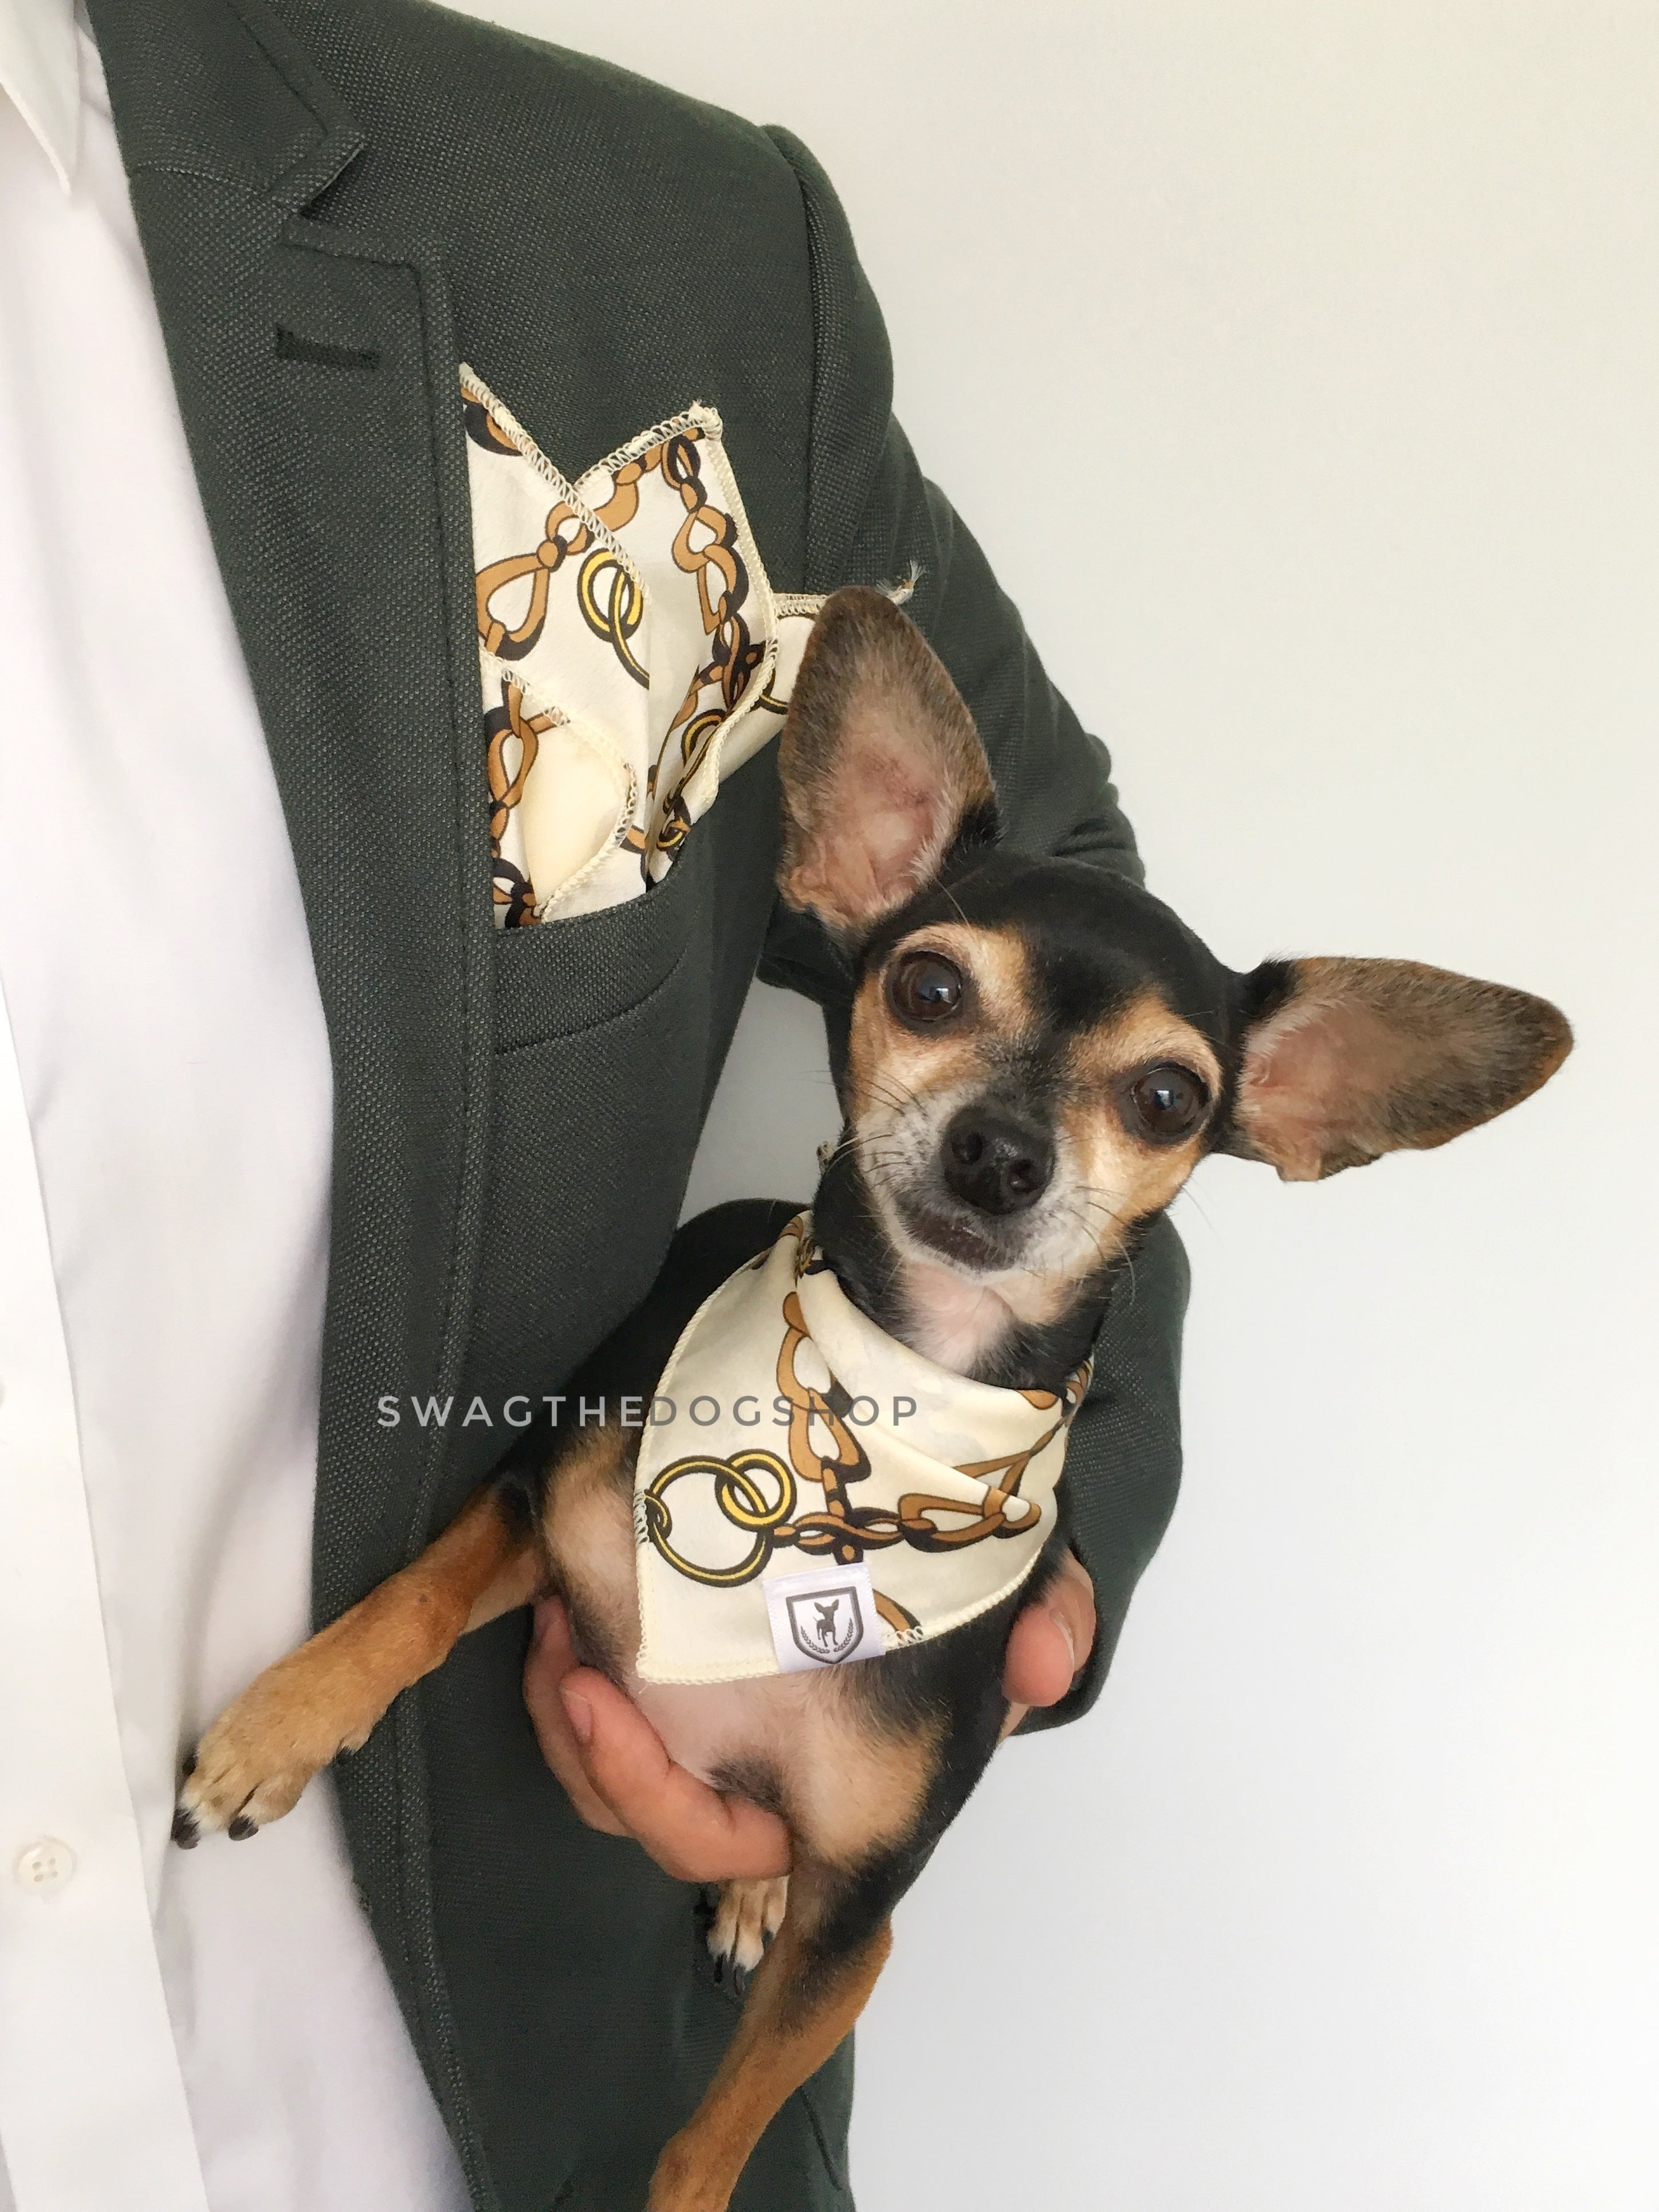 24K Vanilla Gold Swagdana Scarf - Man using Swagdana Scarf as Pocket Square in his Sports Jacket and Hugo, The Chihuahua Wearing Swagdana Scarf as Bandana. Dog Bandana. Dog Scarf